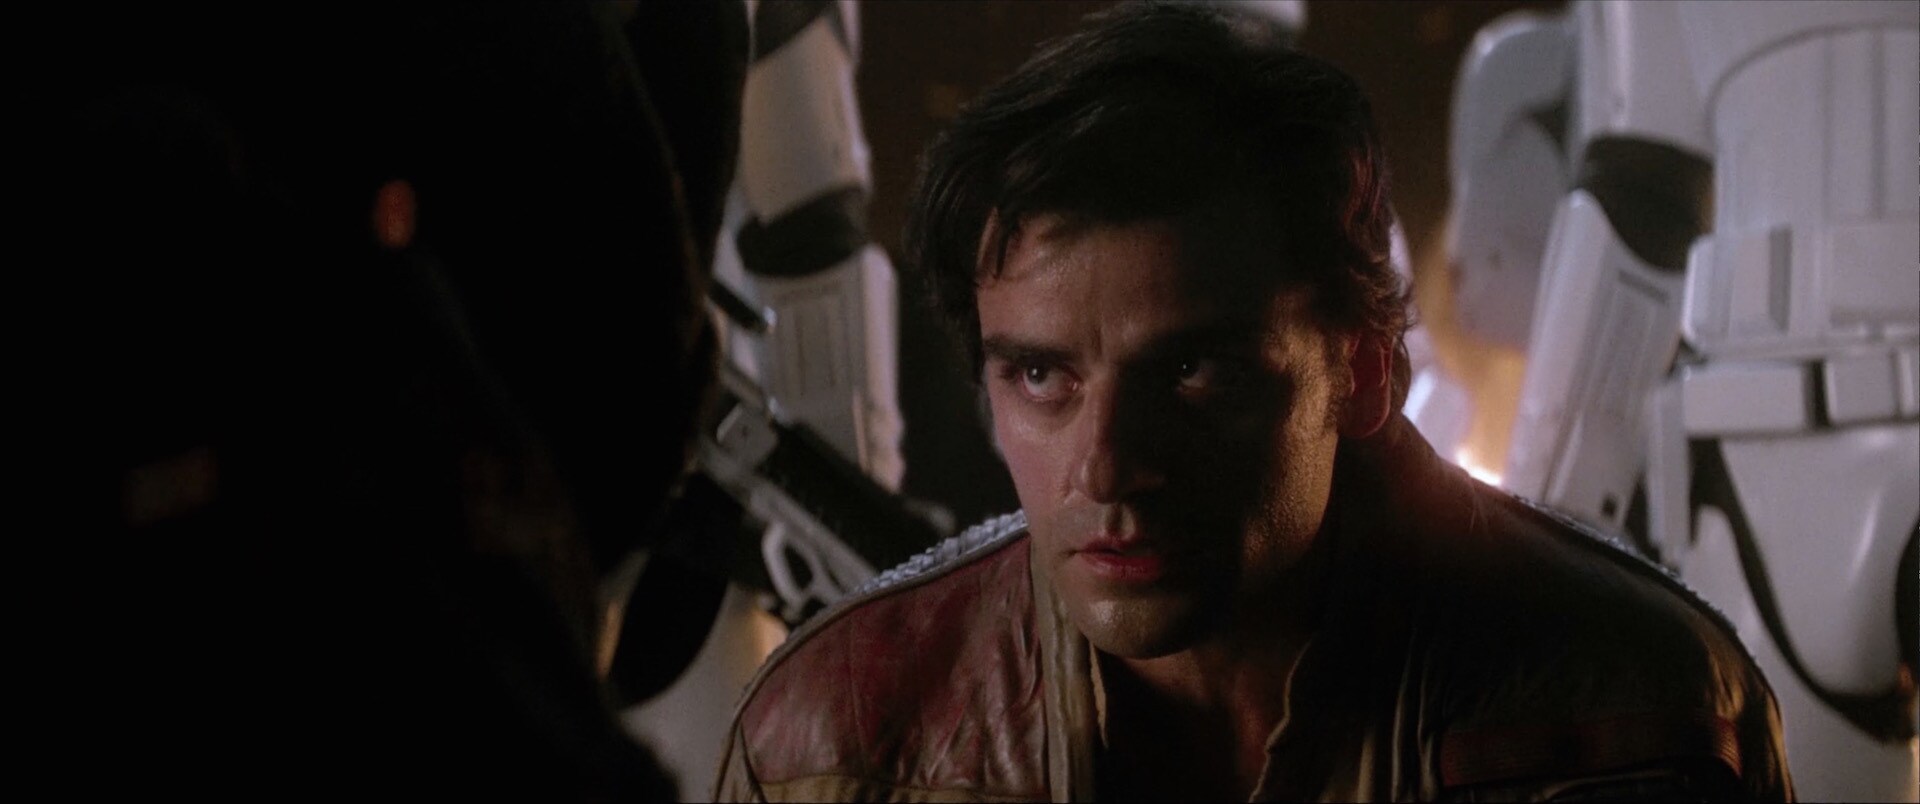 Poe Dameron faces Kylo Ren in Star Wars: The Force Awakens.